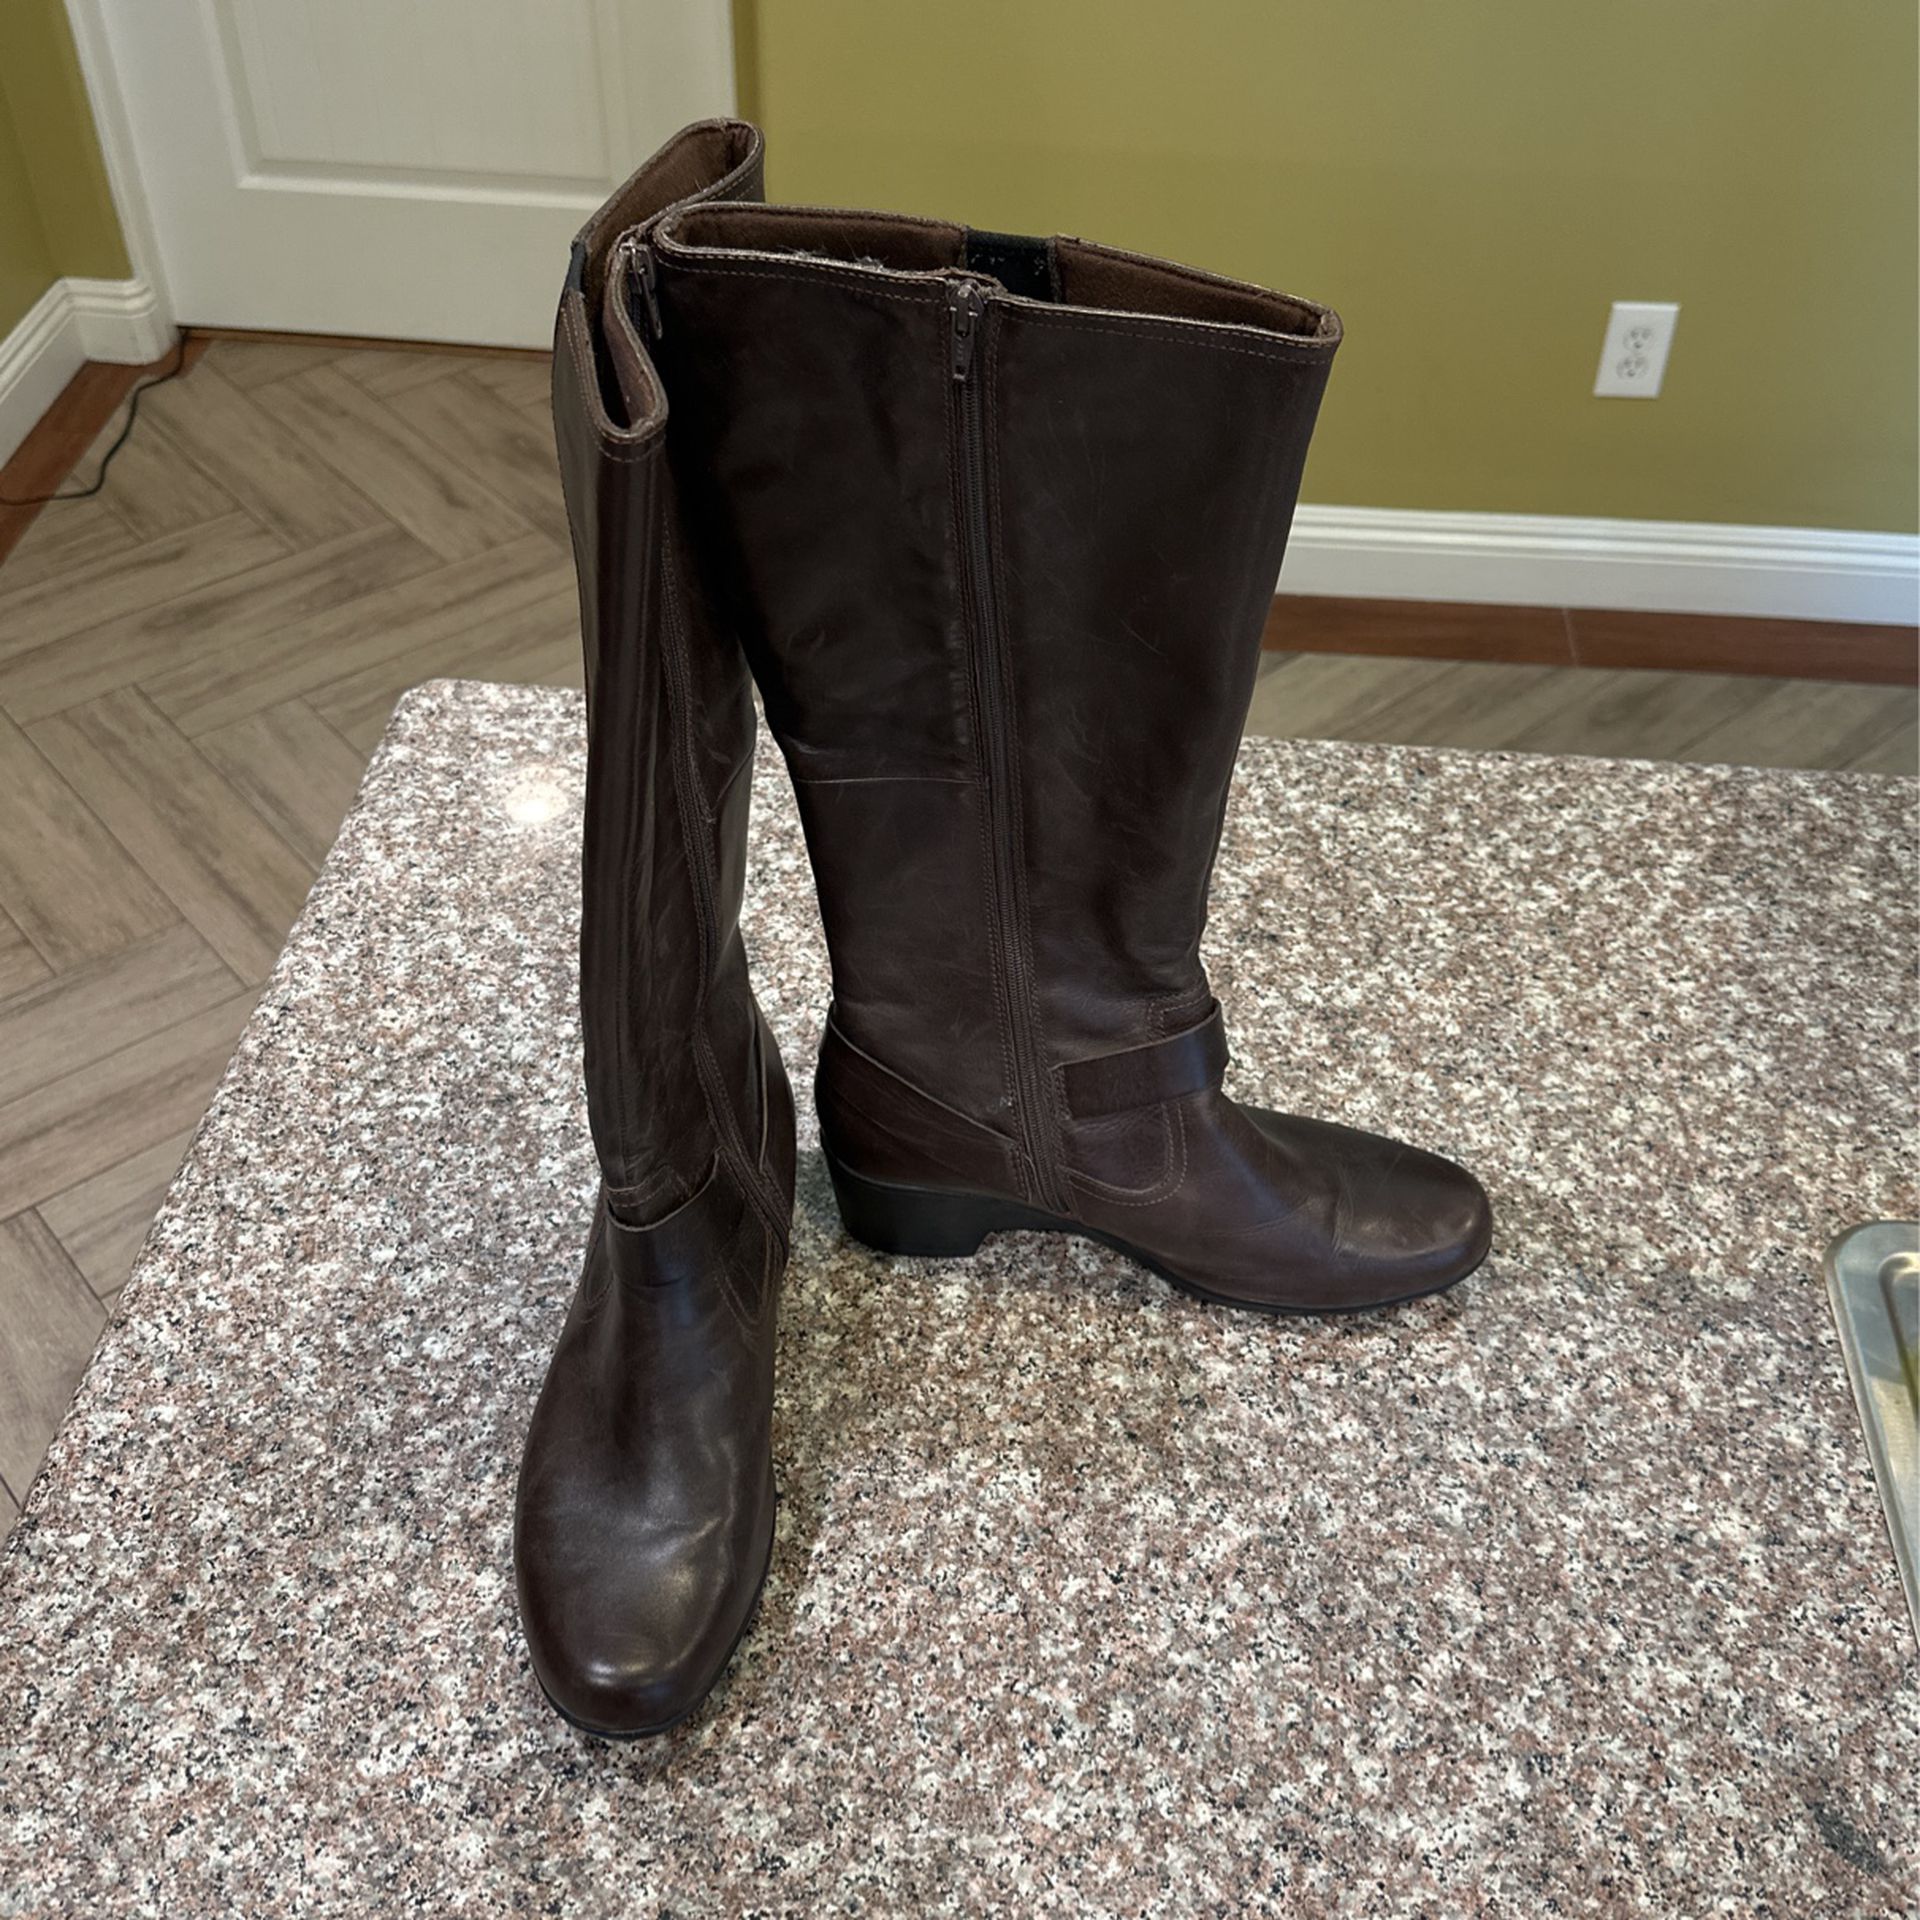 Clarks “Malia Willo” Size 12 Brown Leather Boot